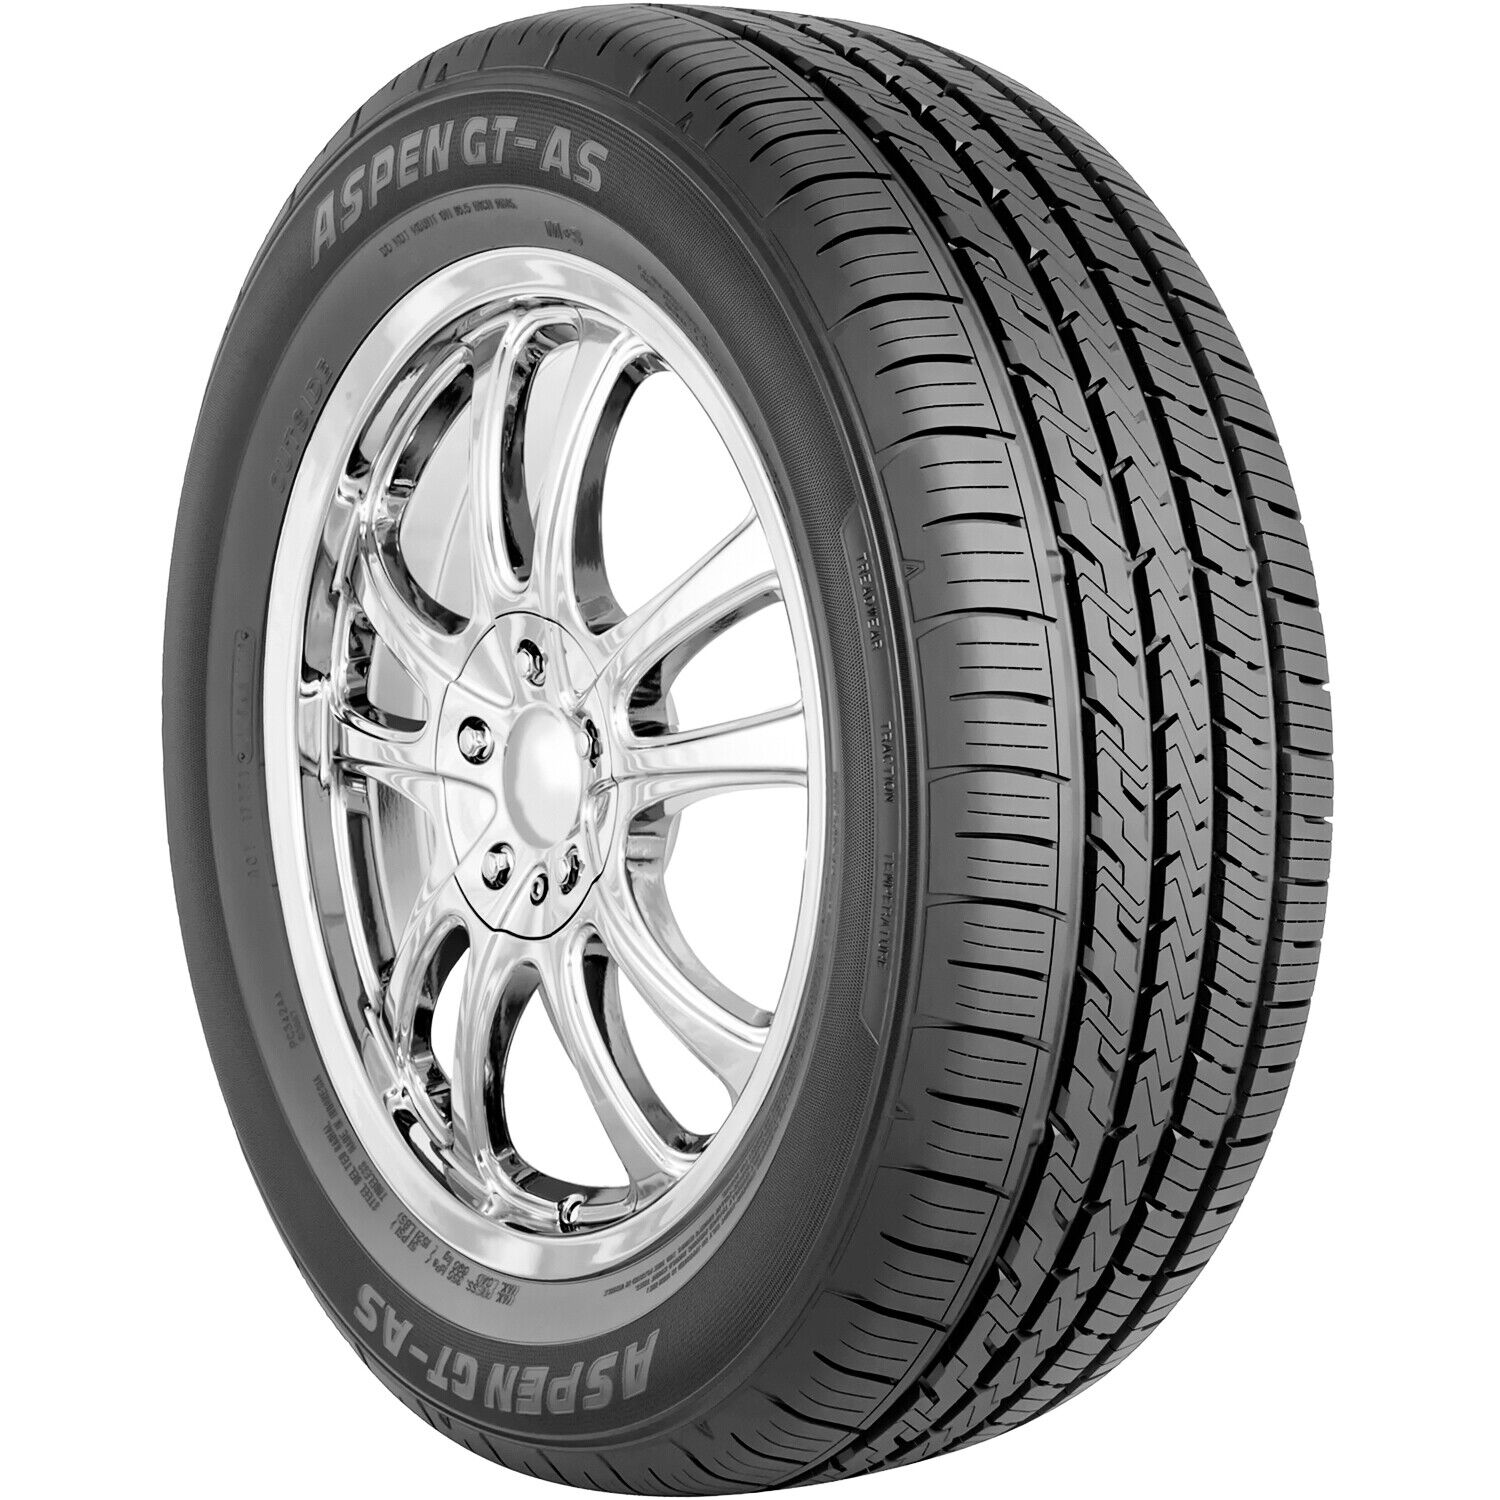 Tire Aspen GT-AS 215/55R17 94V (DC) AS A/S Performance